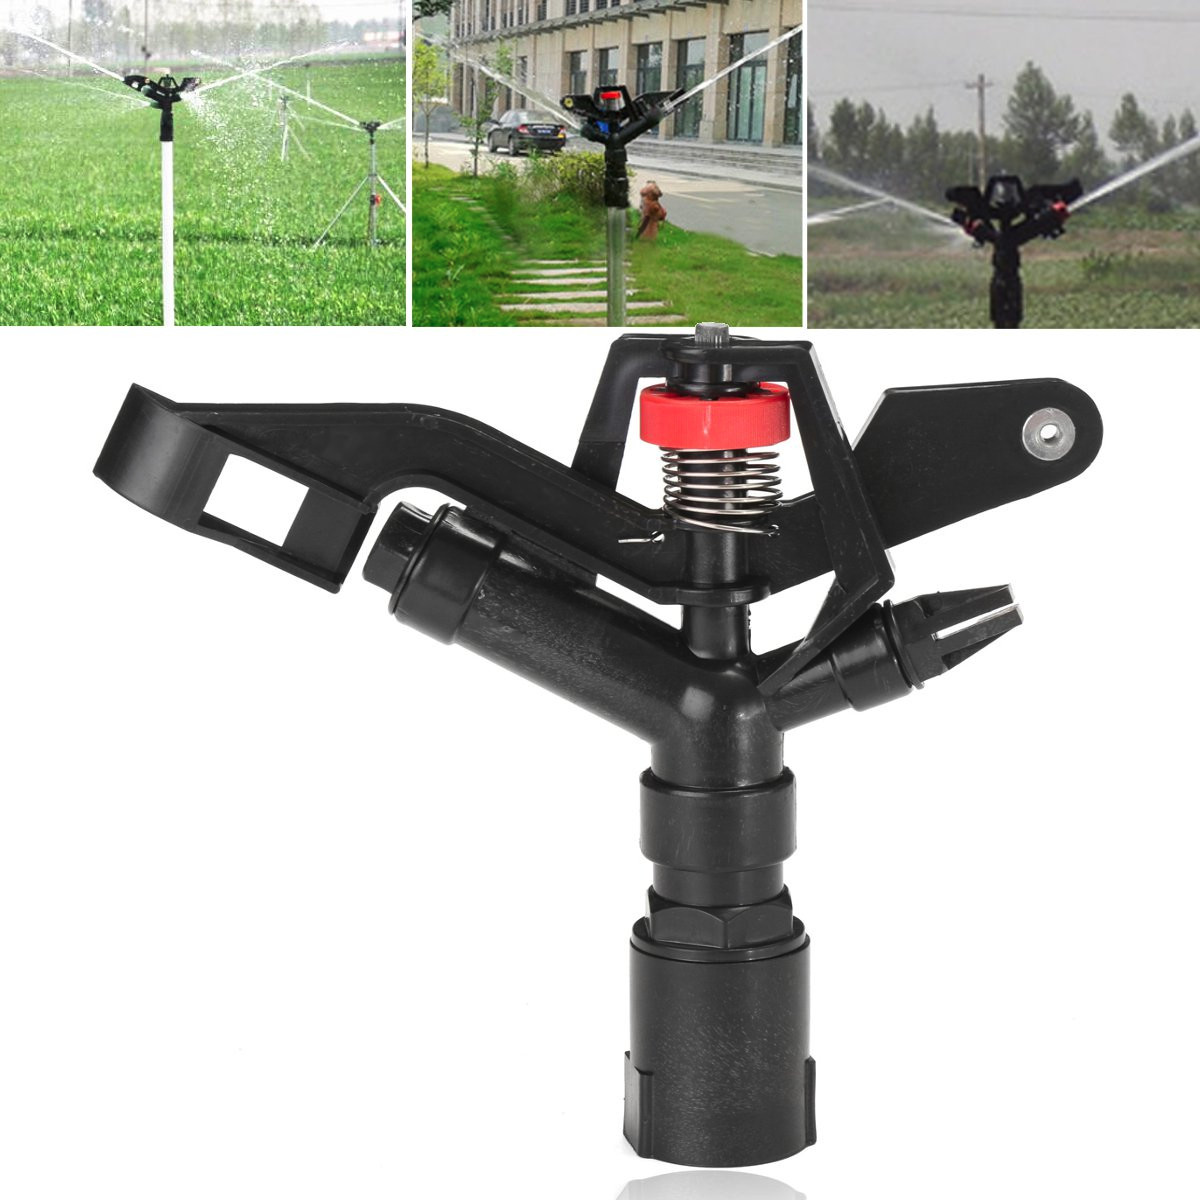 

1'' Inch DN25 Water Irrigation Sprinkler Nozzle Lawn Planting Spray Head